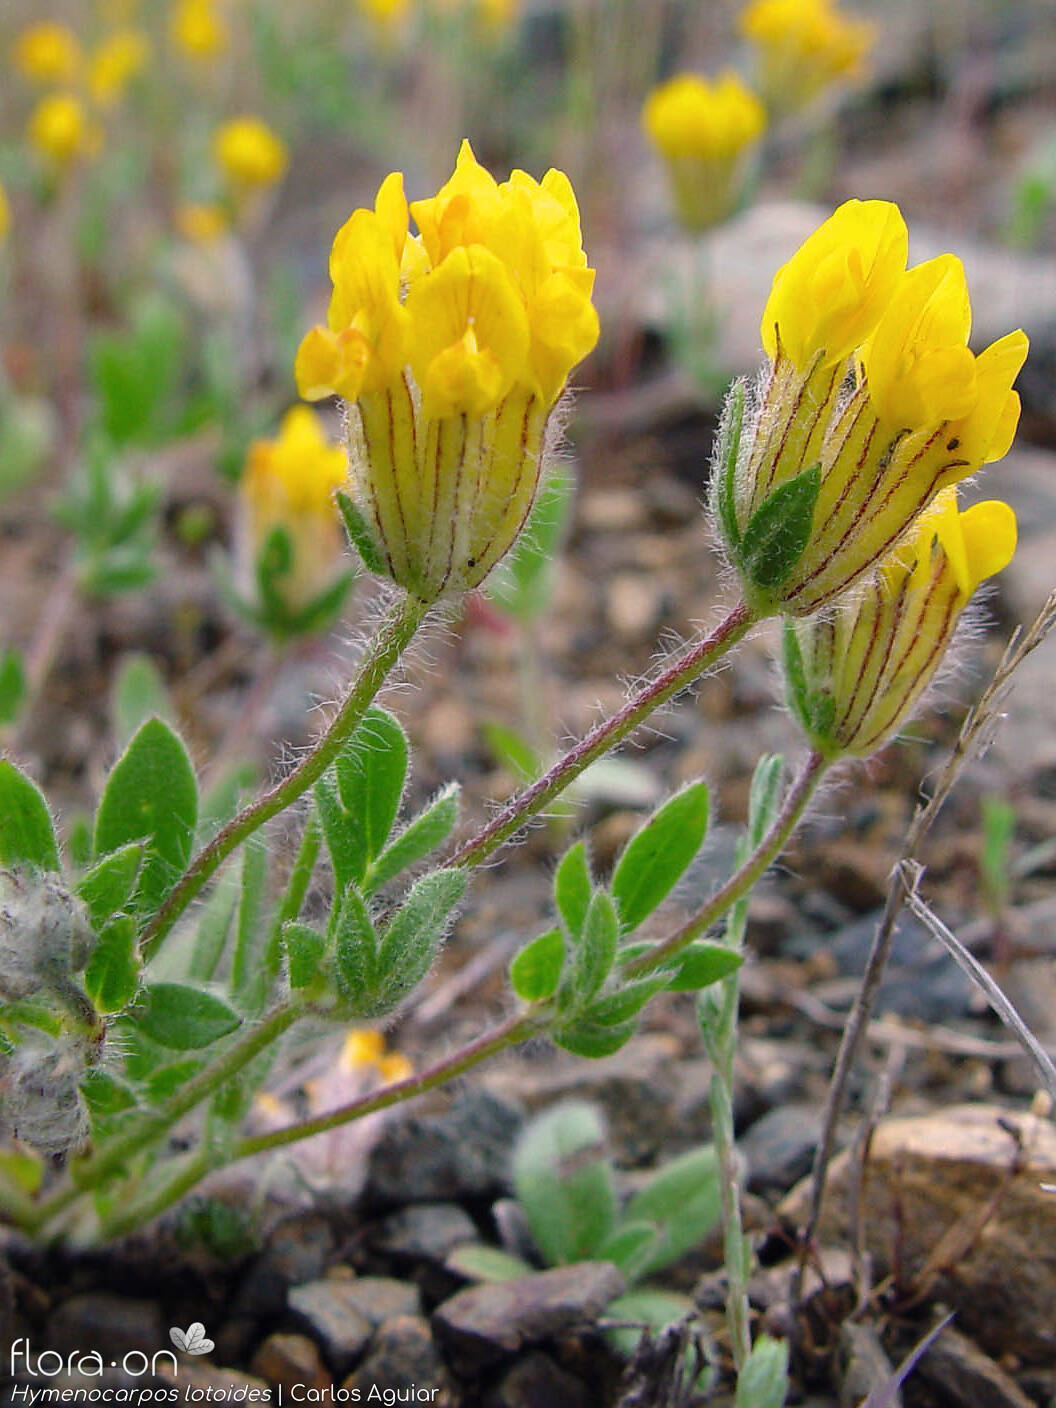 Hymenocarpos lotoides - Flor (geral) | Carlos Aguiar; CC BY-NC 4.0